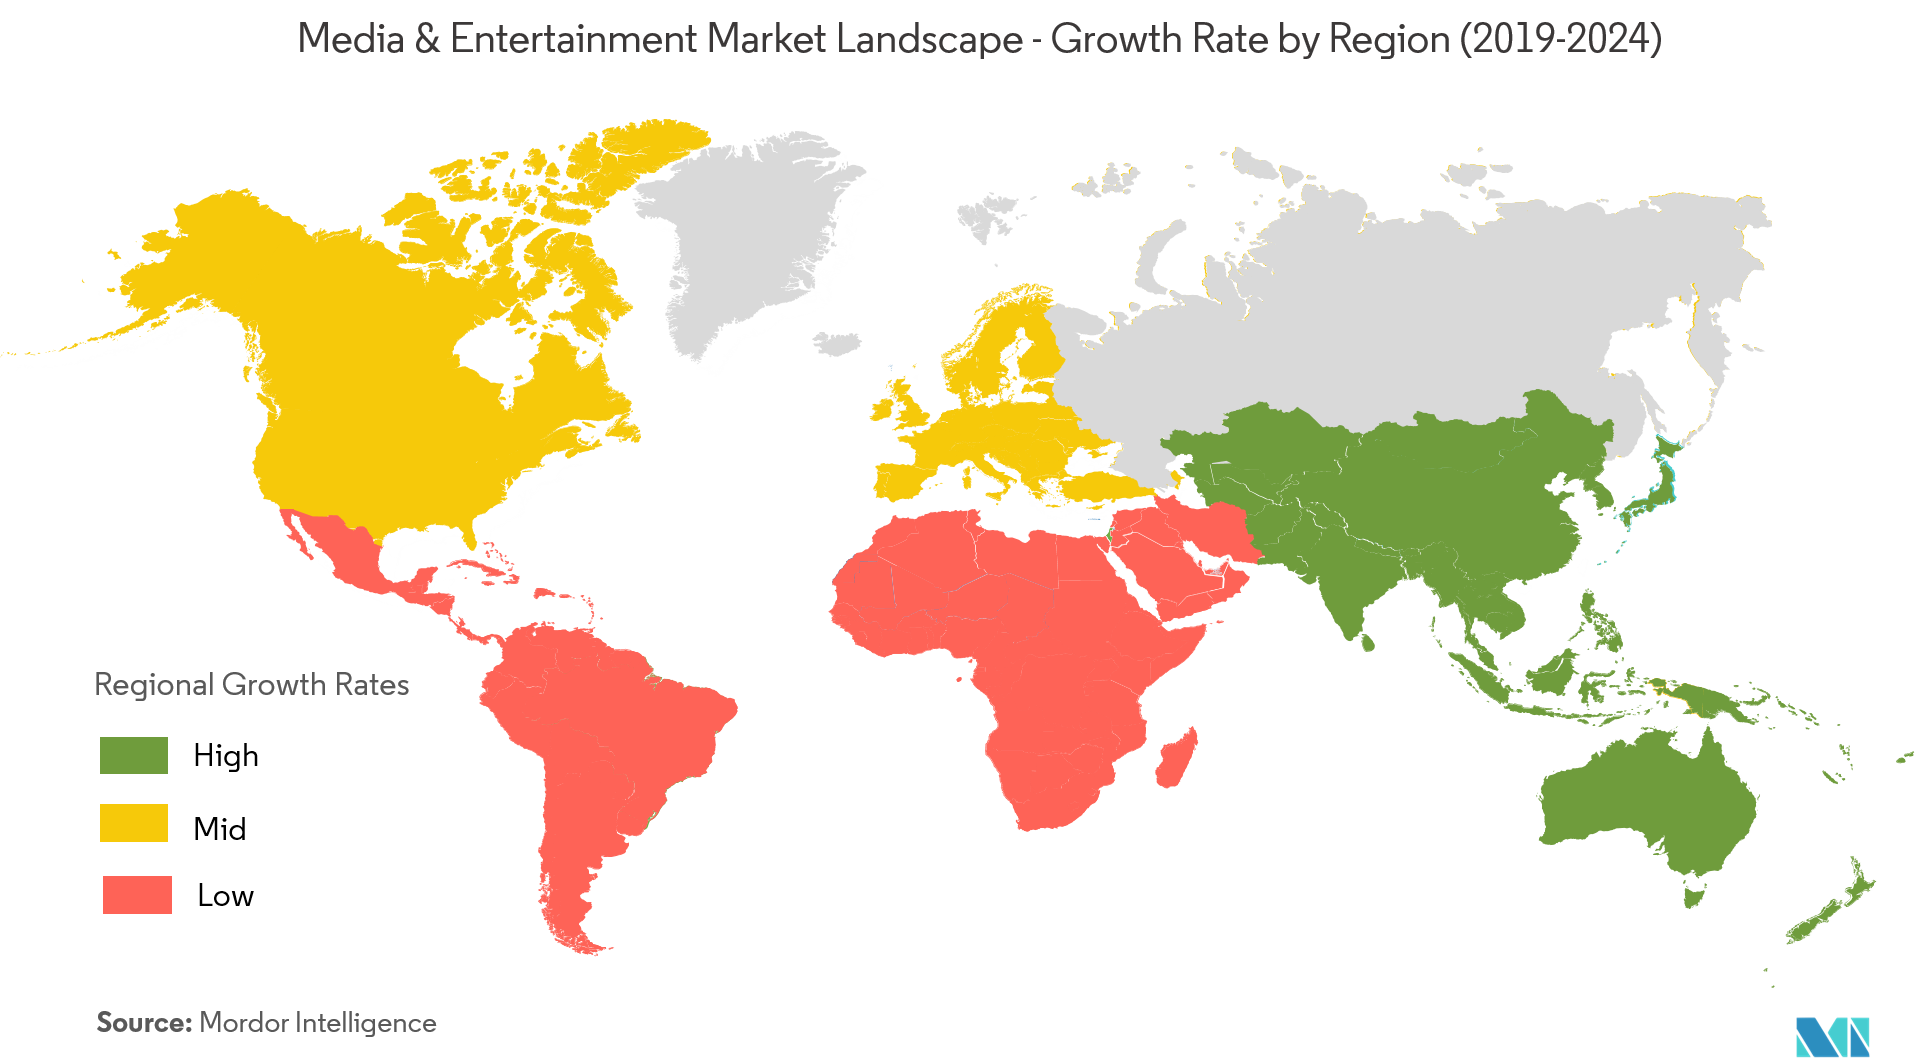 Media & Entertainment Market Landscape Growth by Region